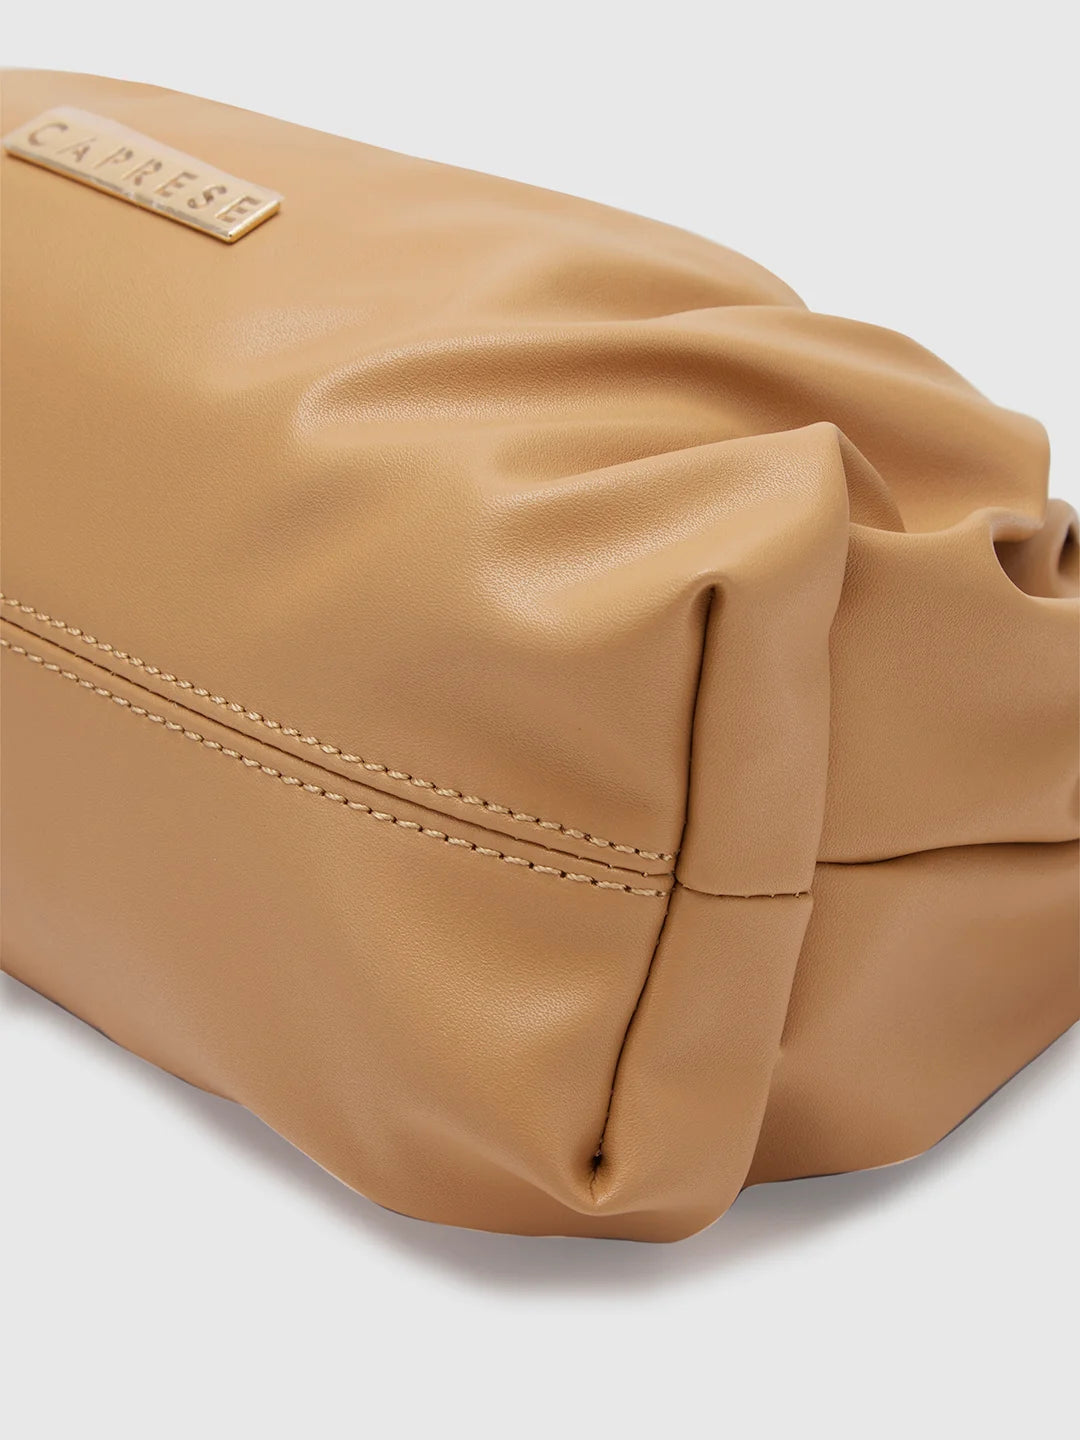 Buy Caprese Brown Sling Bag - Handbags for Women 1247534 | Myntra